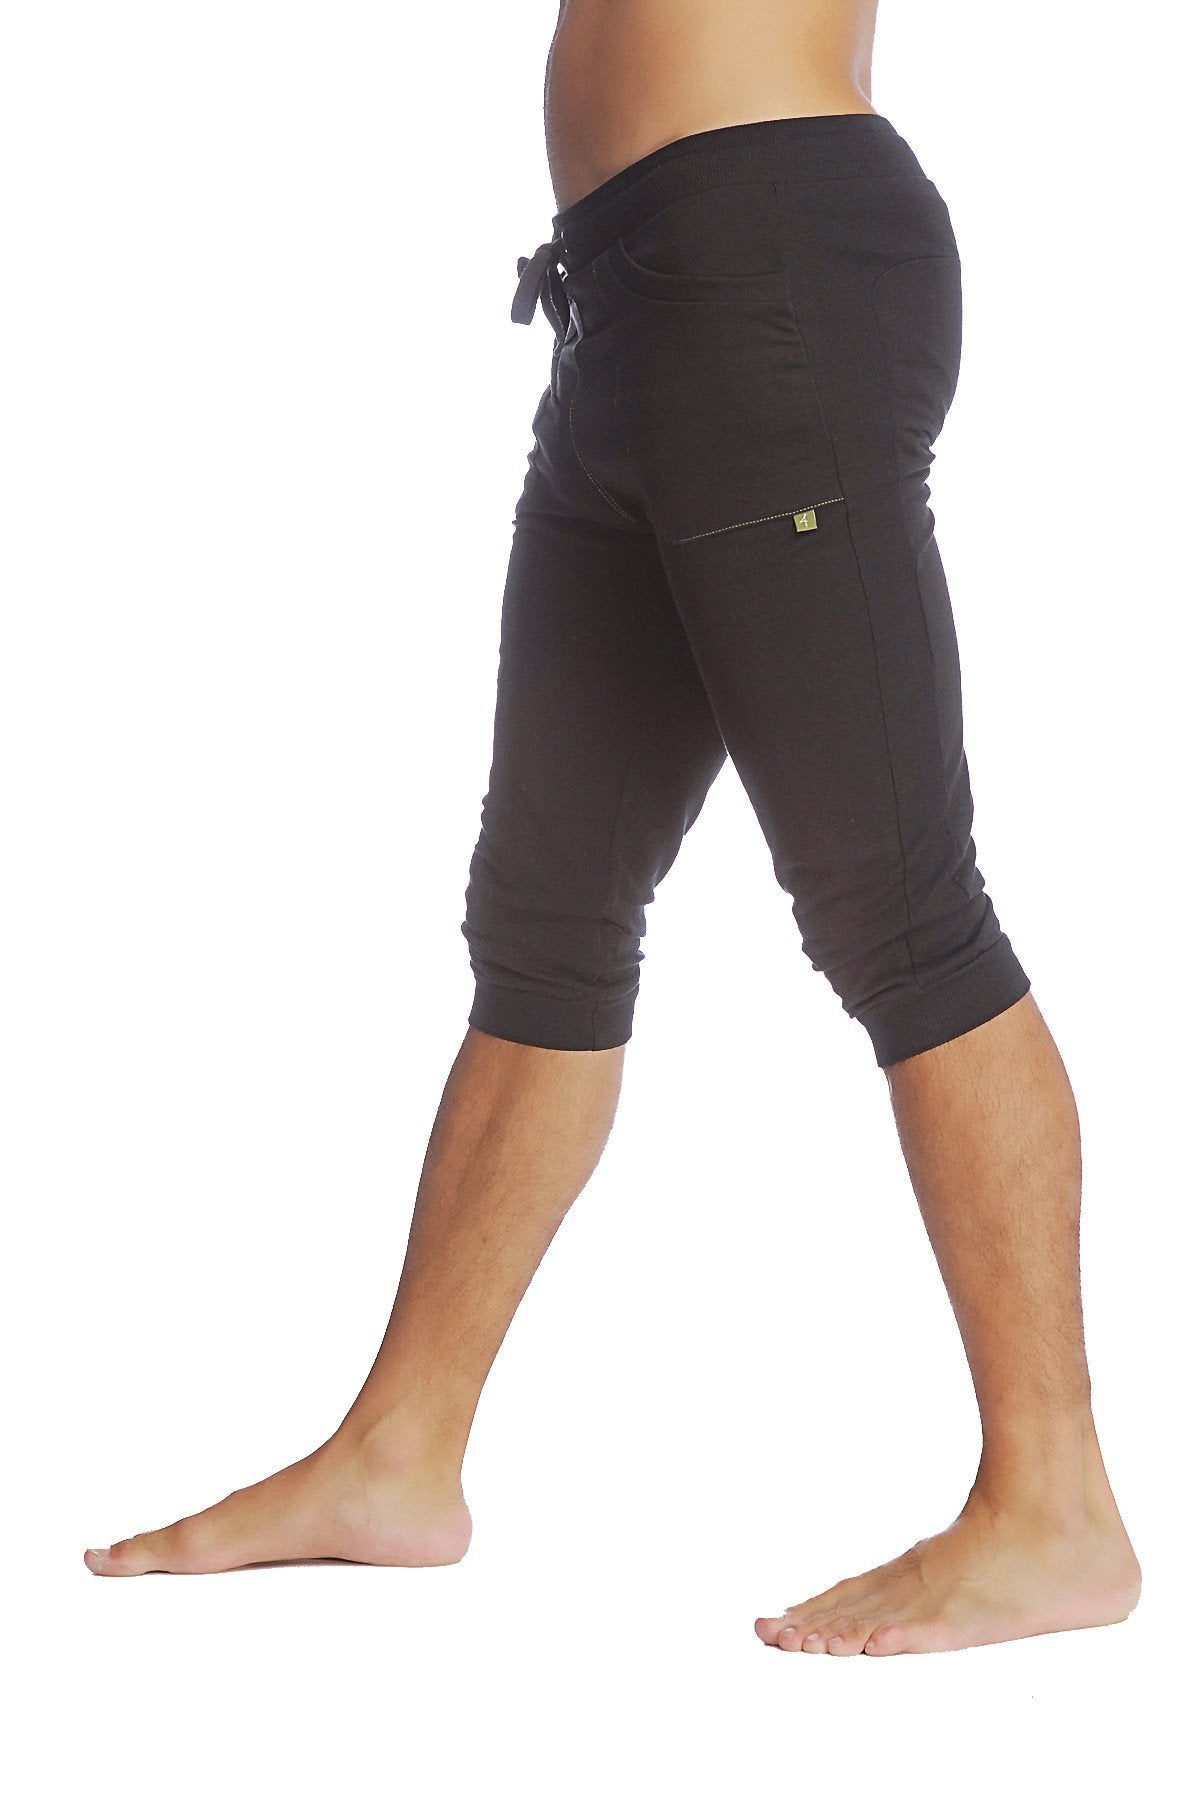 Cuffed Yoga Pants (Solid Black) - 4-rth